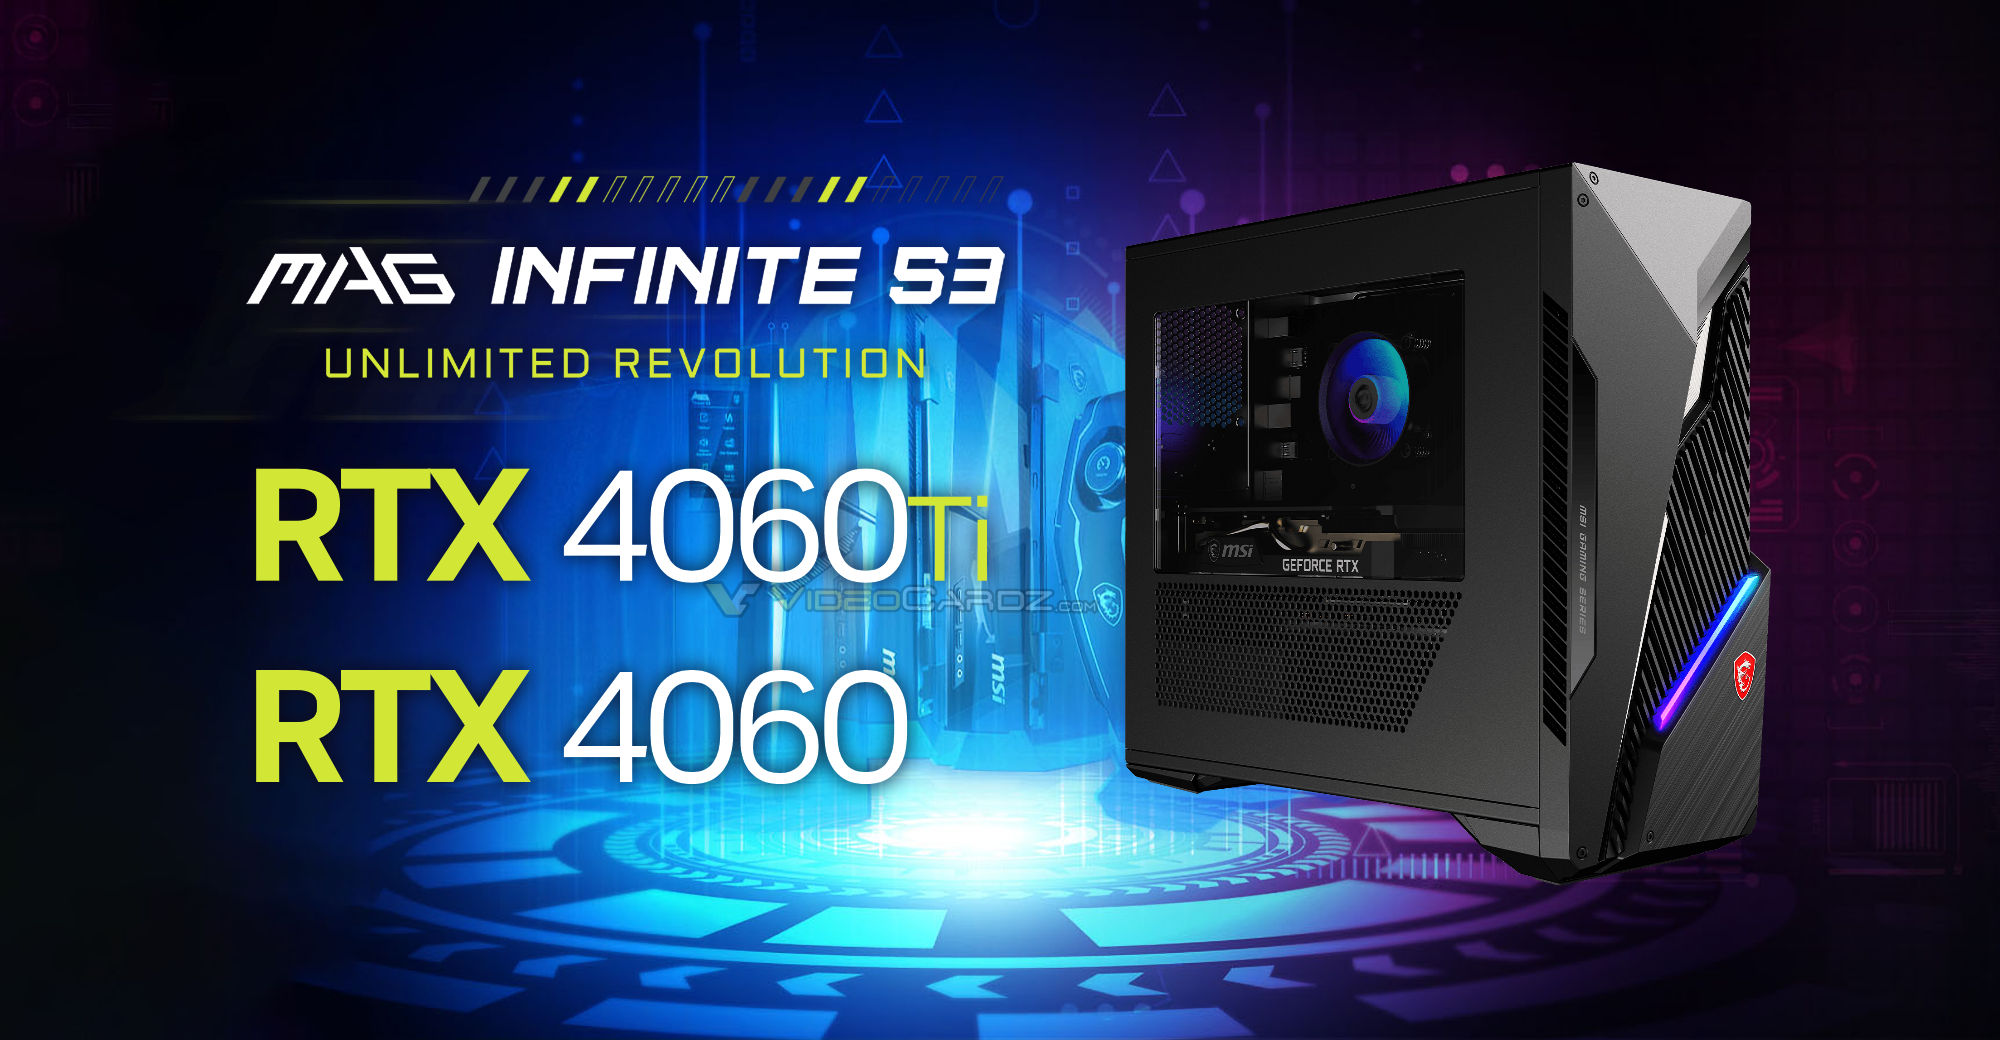 MAG Infinite S3 13th UNLIMITED REVOLUTION, Gaming Desktop Computer